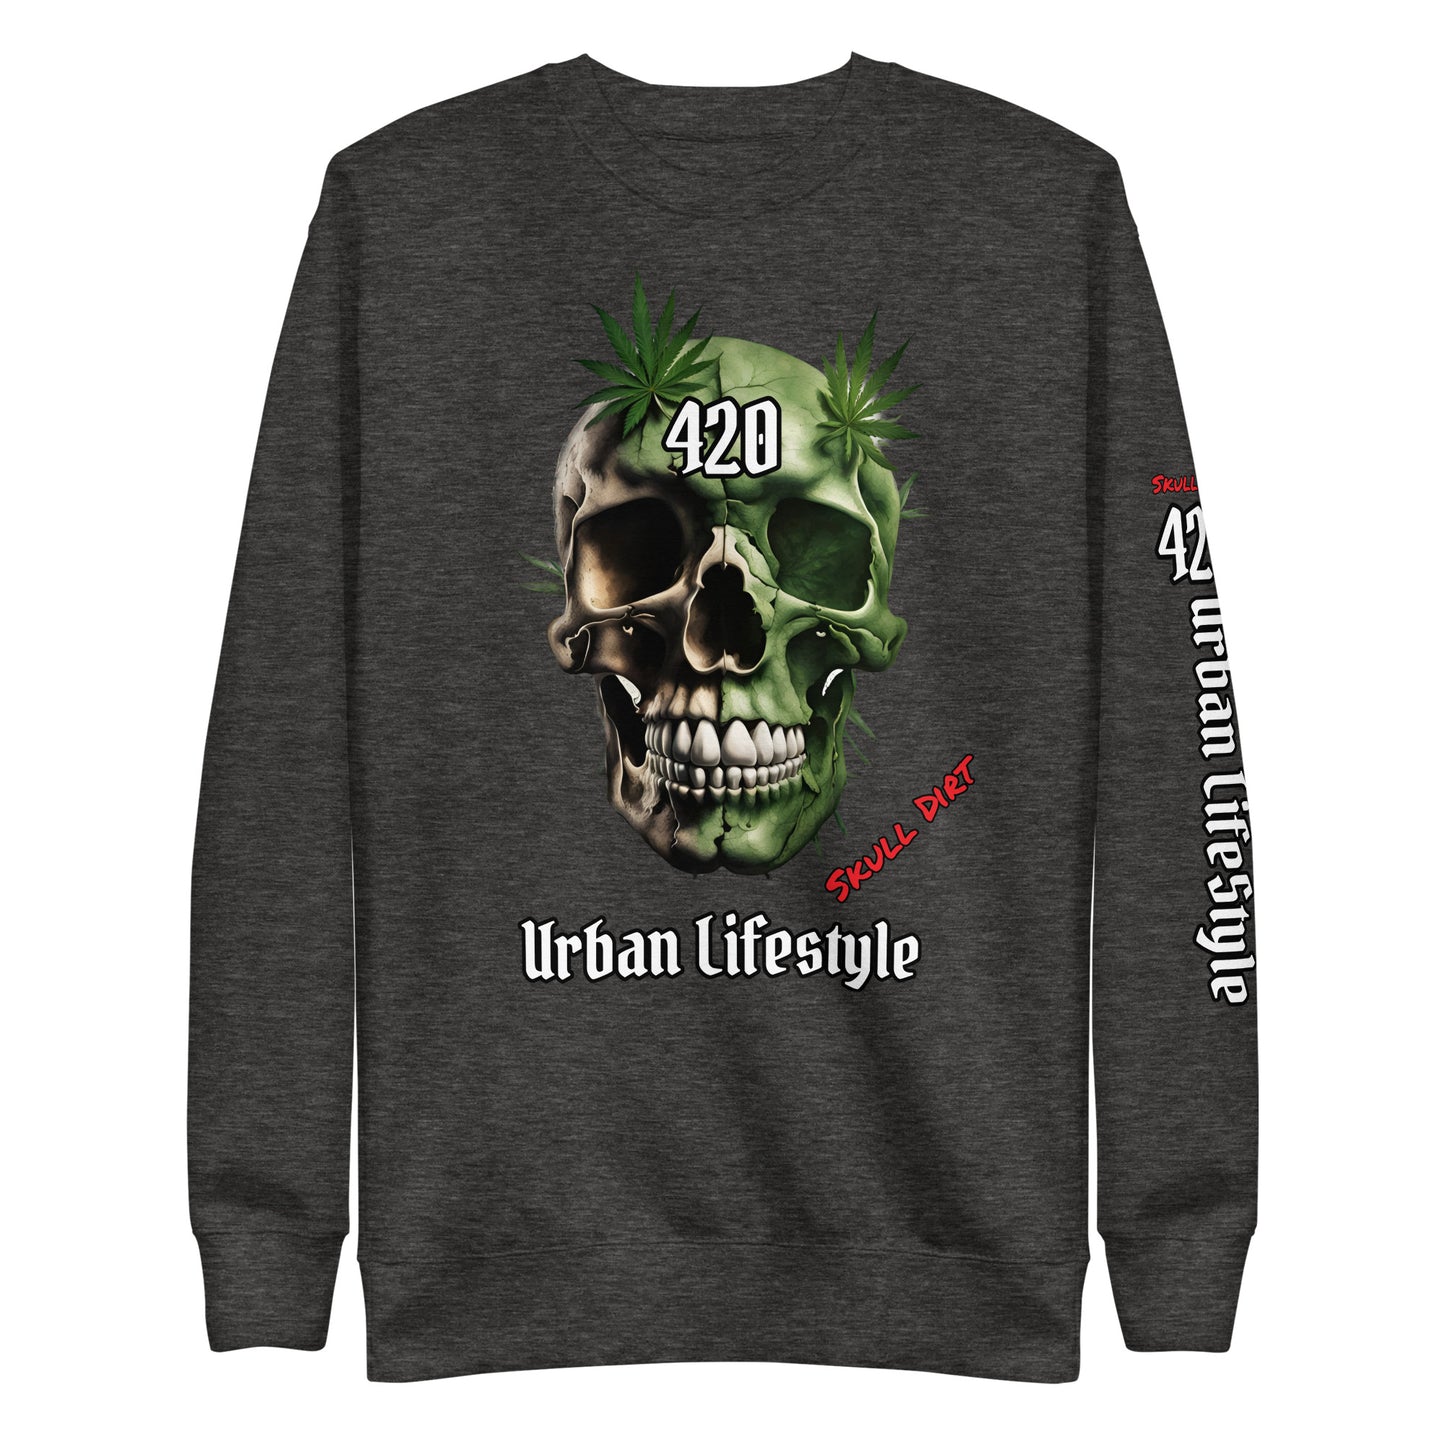 "420 Urban Lifestyle" Unisex Premium Sweatshirt HodI